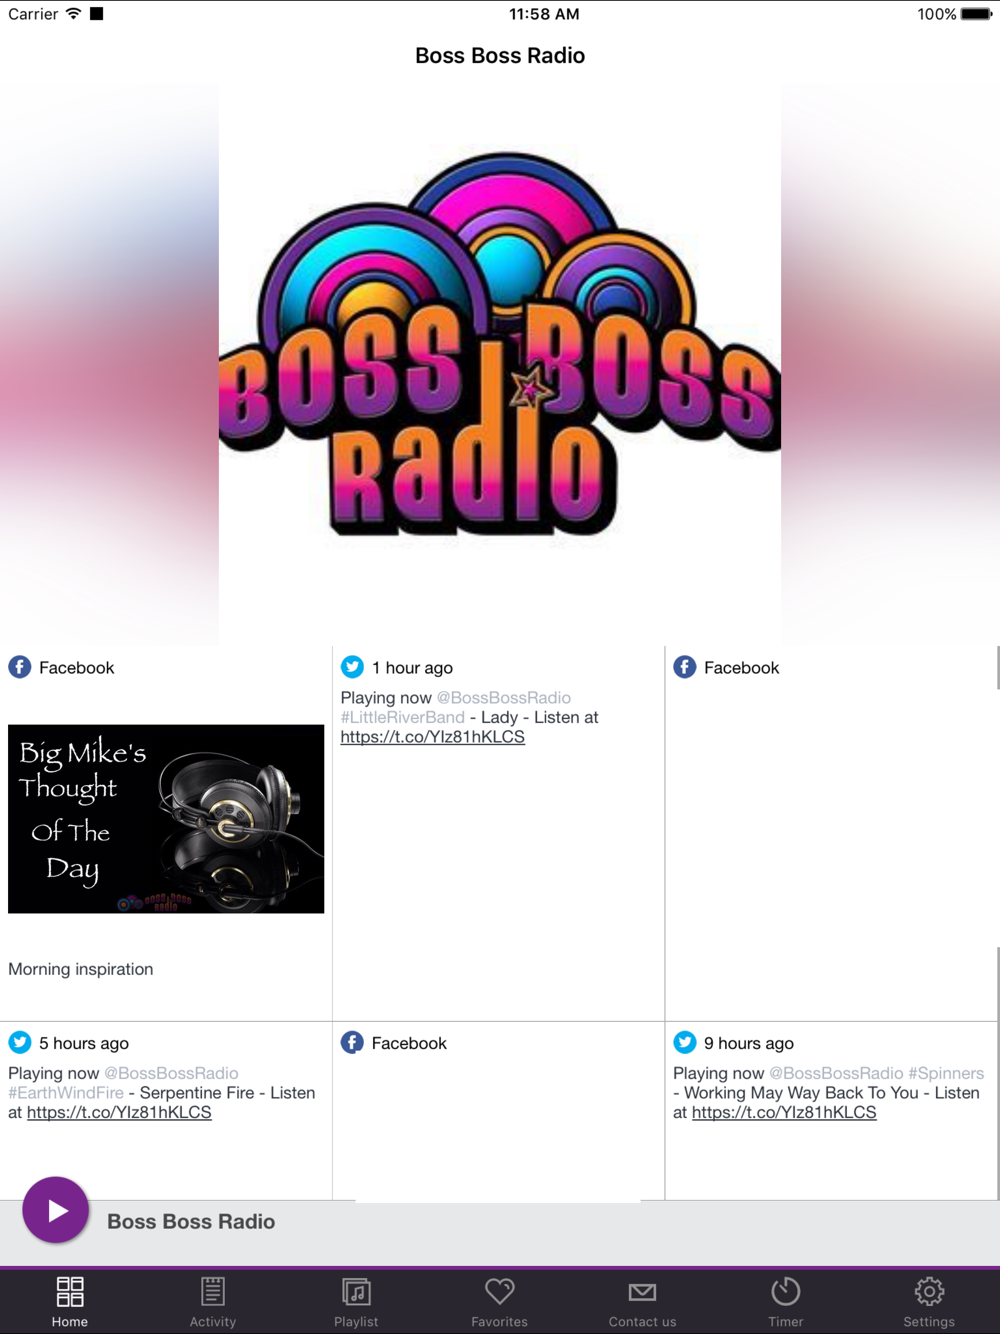 Boss Boss Radio Free Download App for iPhone - STEPrimo.com